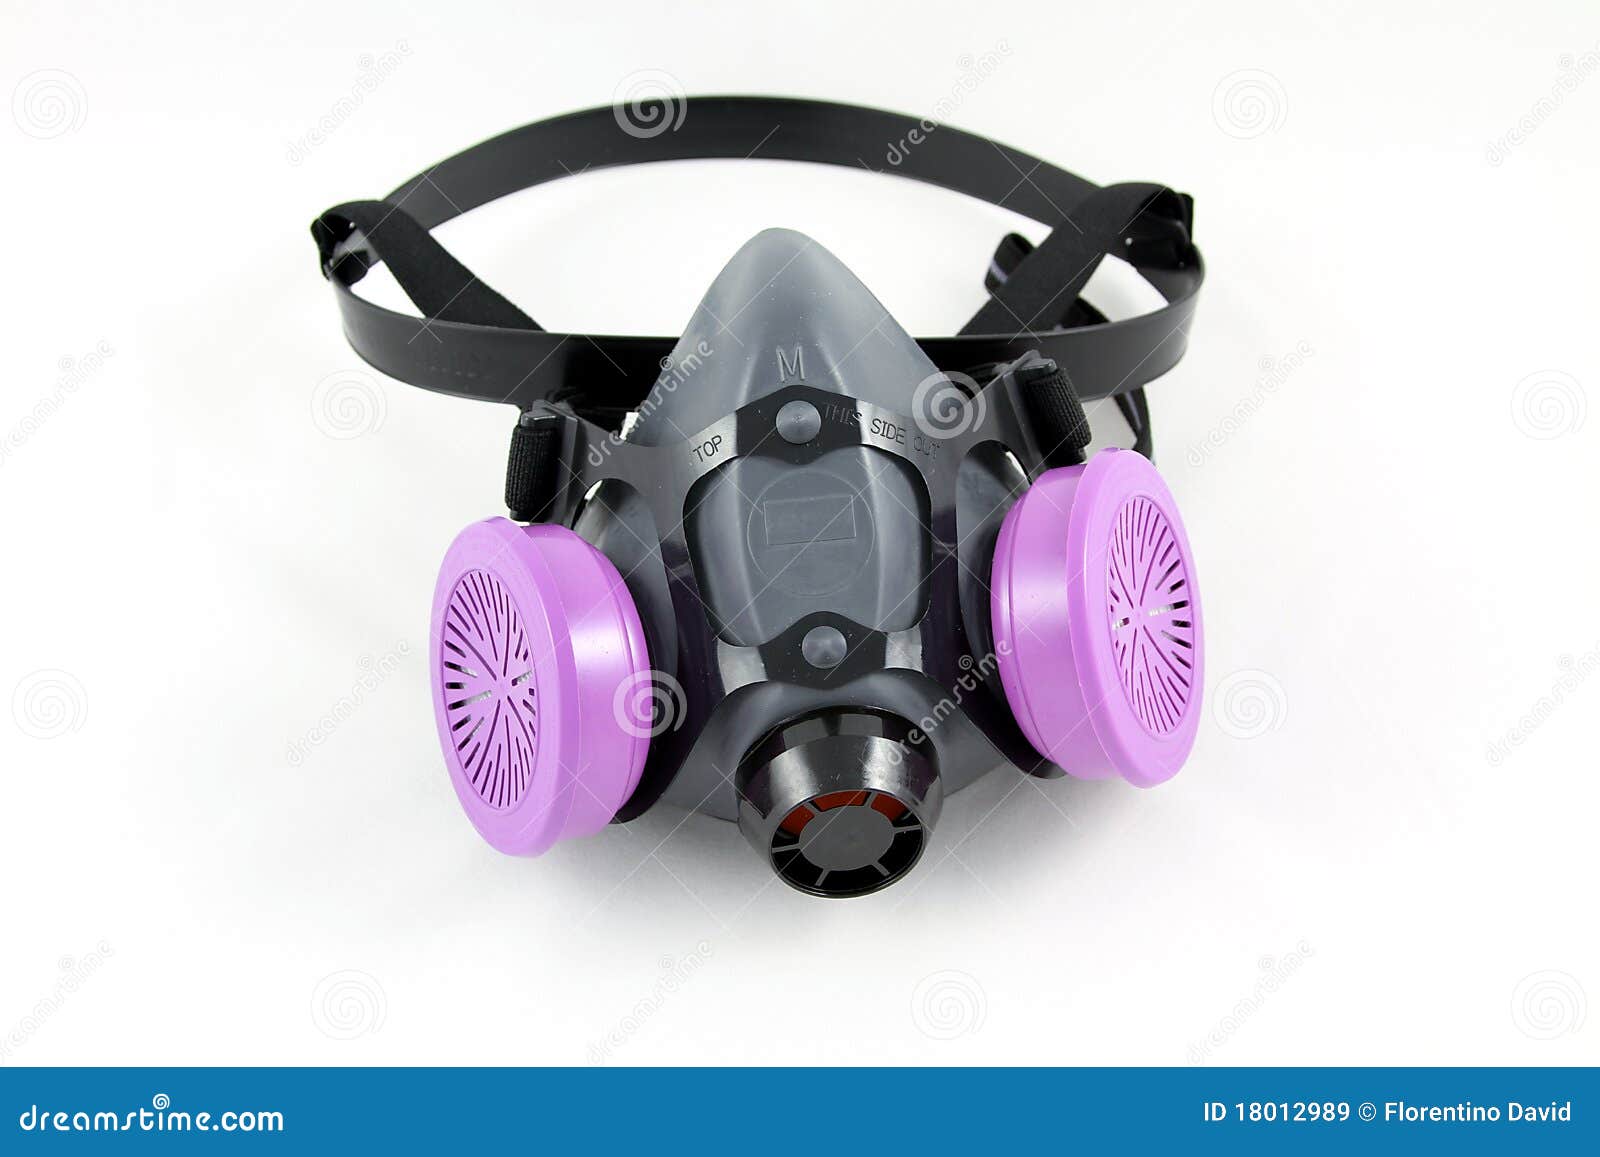 air filter mask